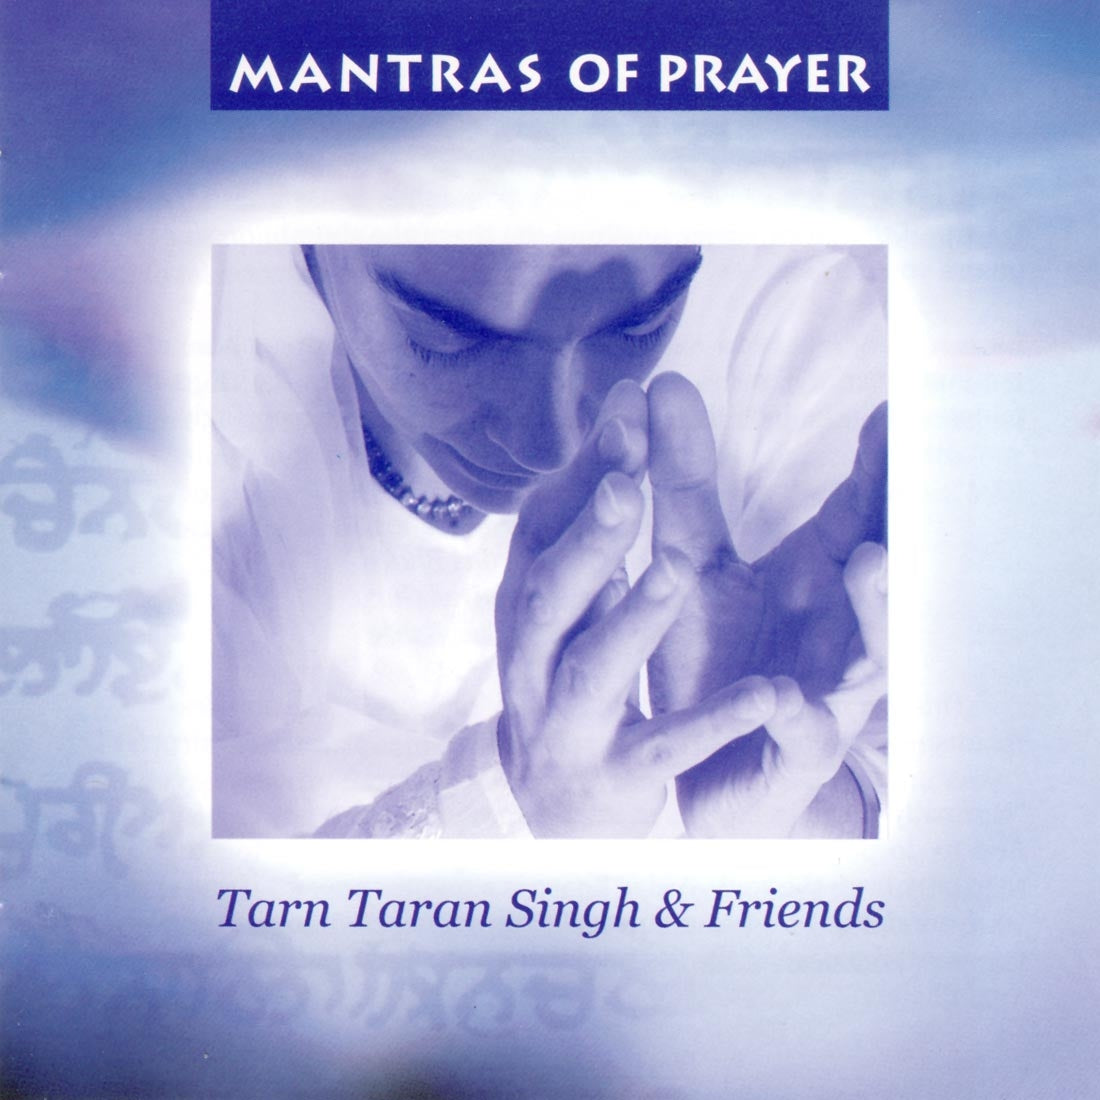 Siri Mantra - Tarn Taran Singh et ses amis